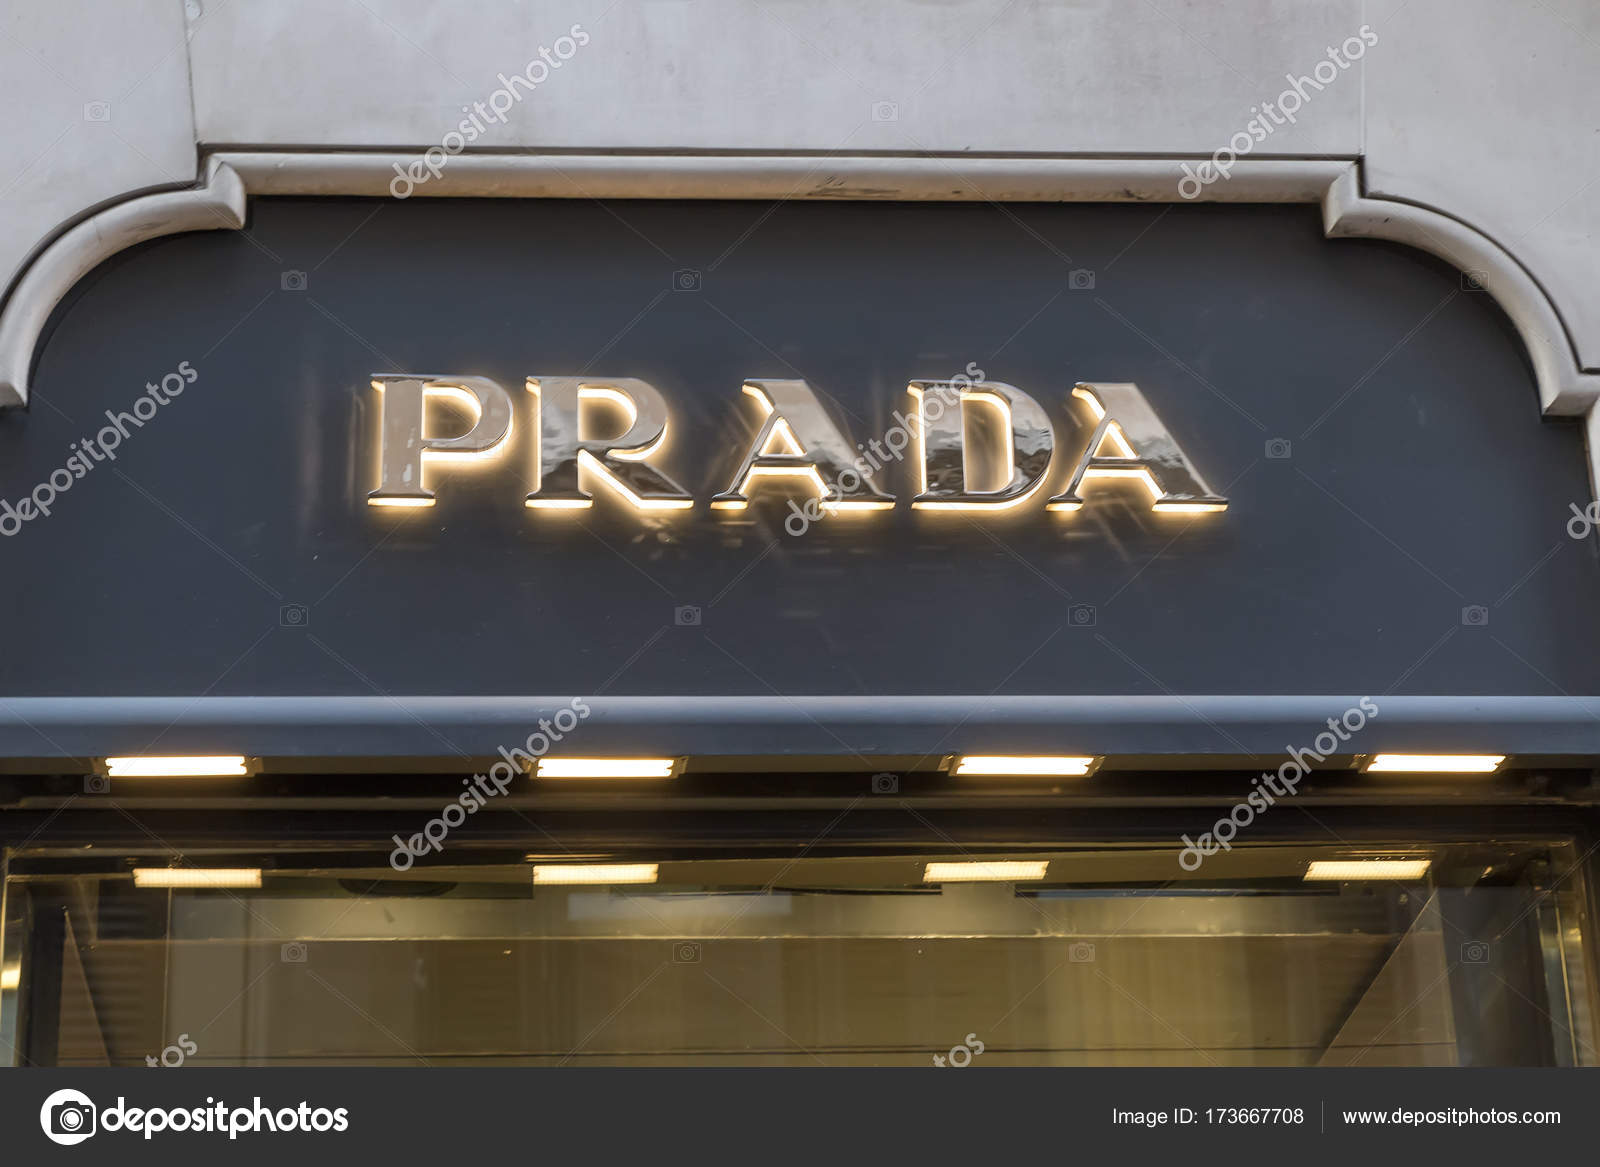 Pictures : prada sunglasses | Prada sign for store – Stock Editorial ...